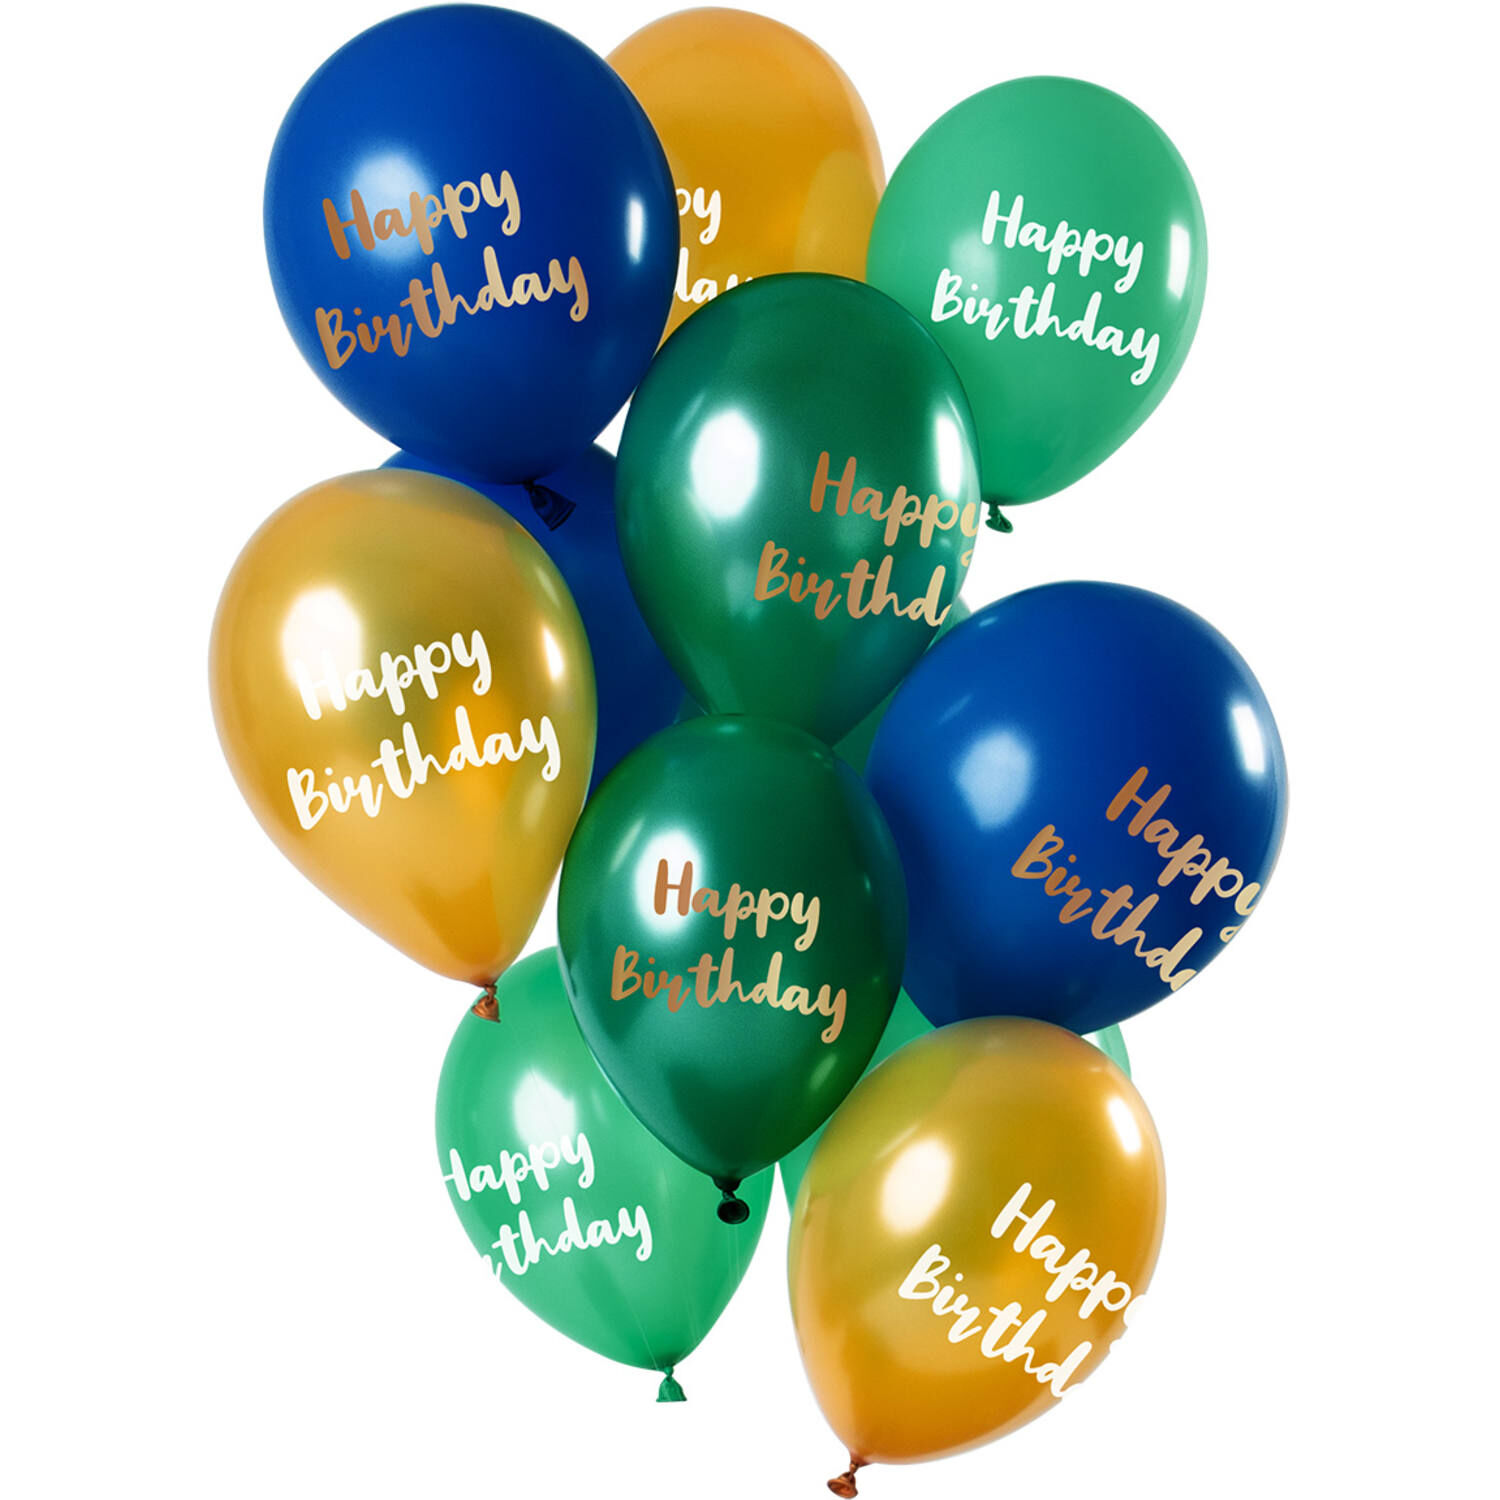 NEU Premium-Latex-Luftballons Happy Birthday, Green-Gold, 33cm, 12 Stk.